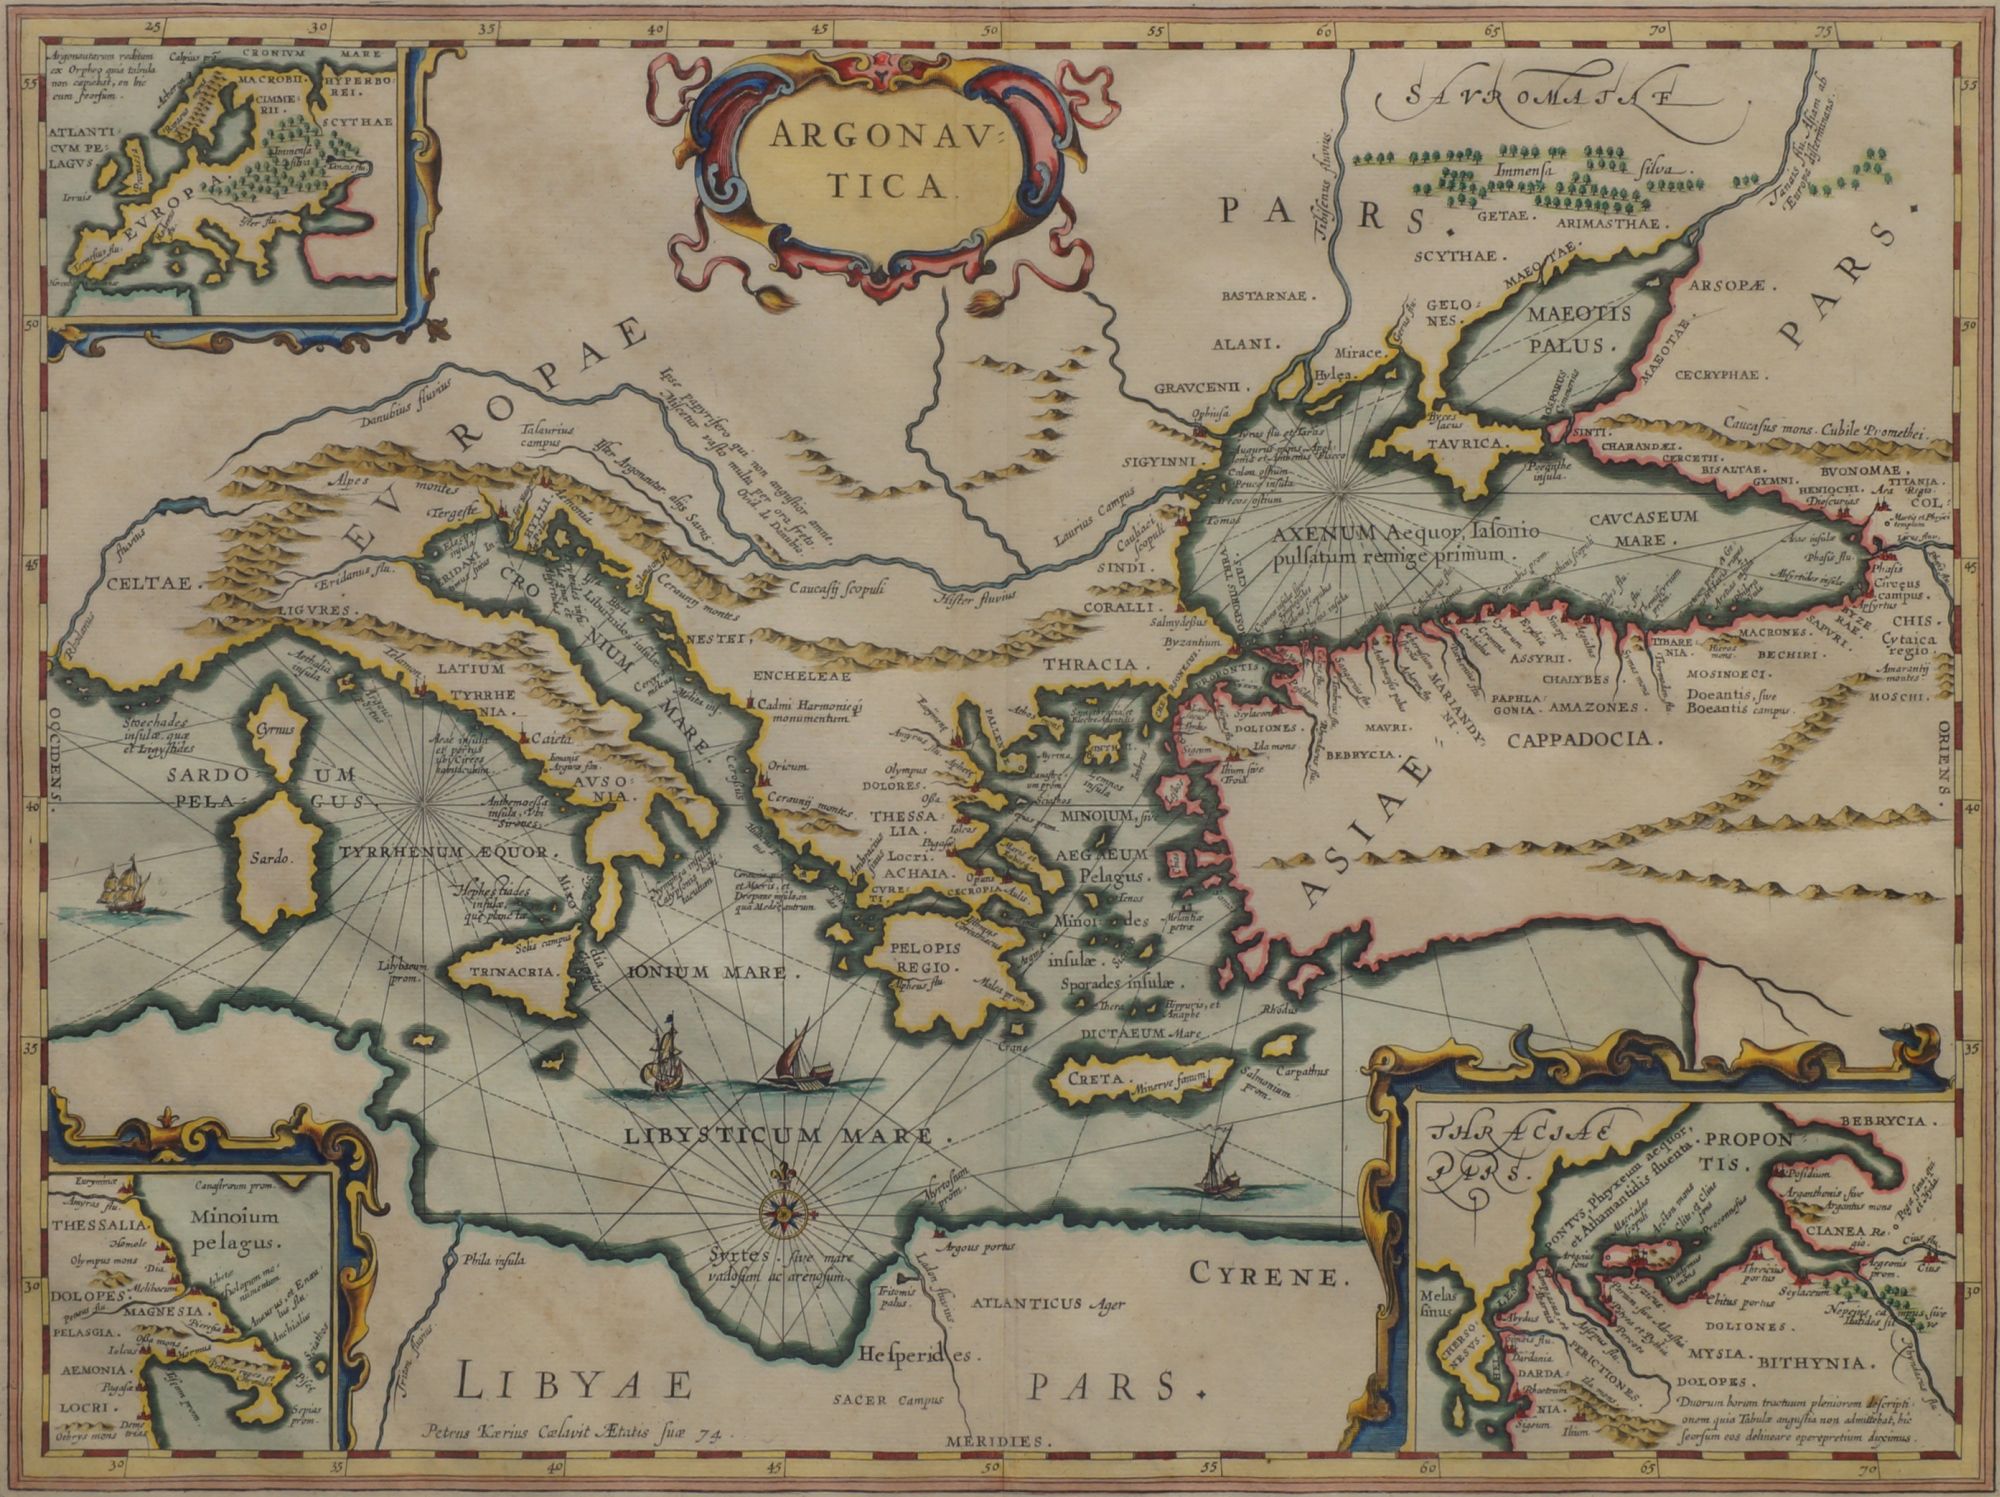 Johannes Janssonius, Dutch 1588-1664- "Aragonau Tica", map of the voyage of the Argonaut,